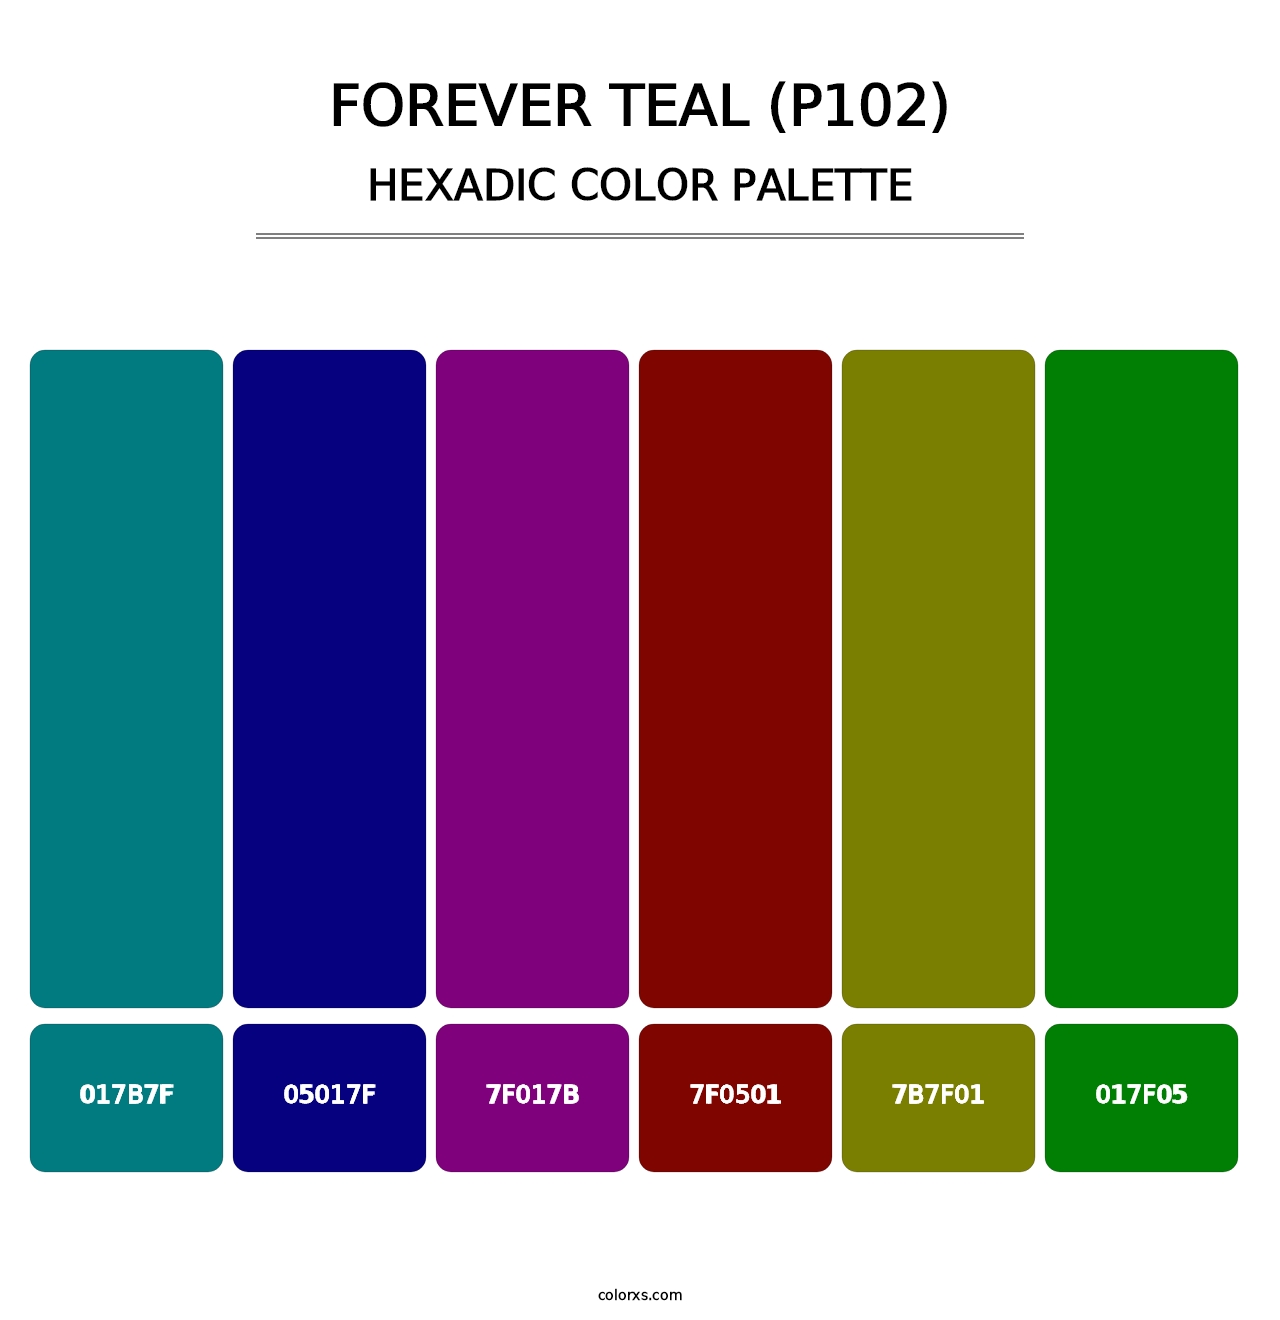 Forever Teal (P102) - Hexadic Color Palette